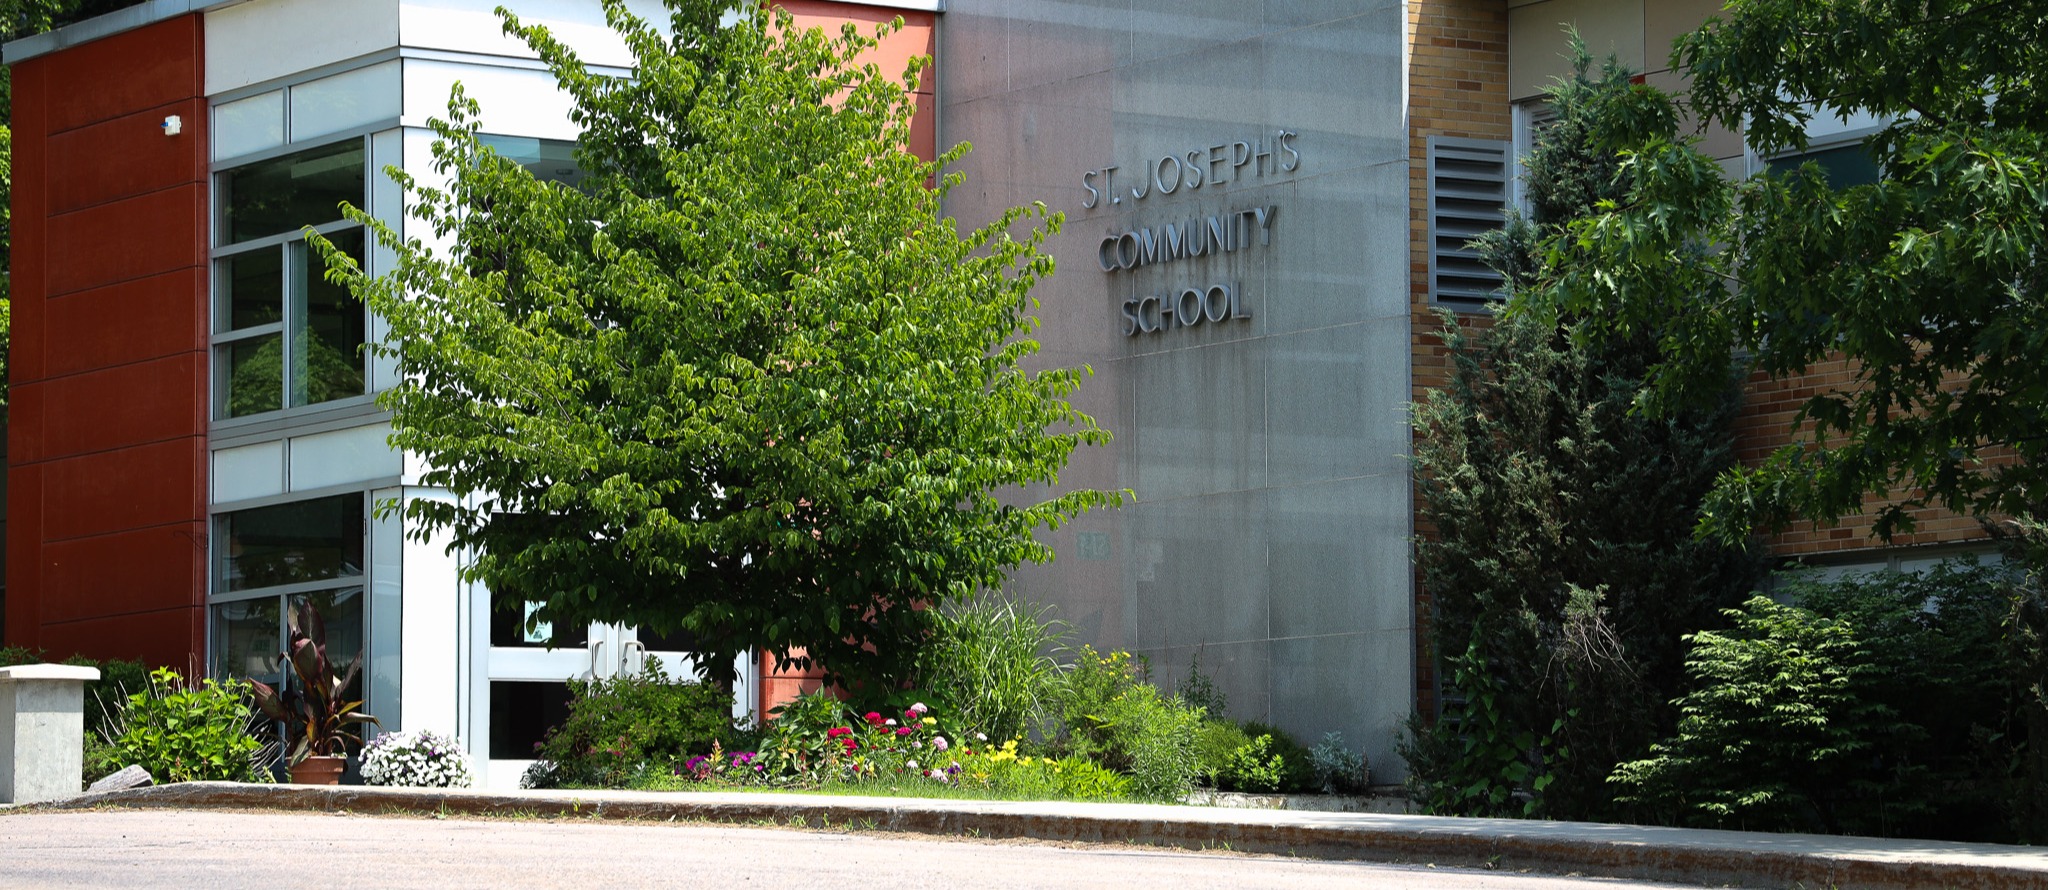 St. Joseph's Community School